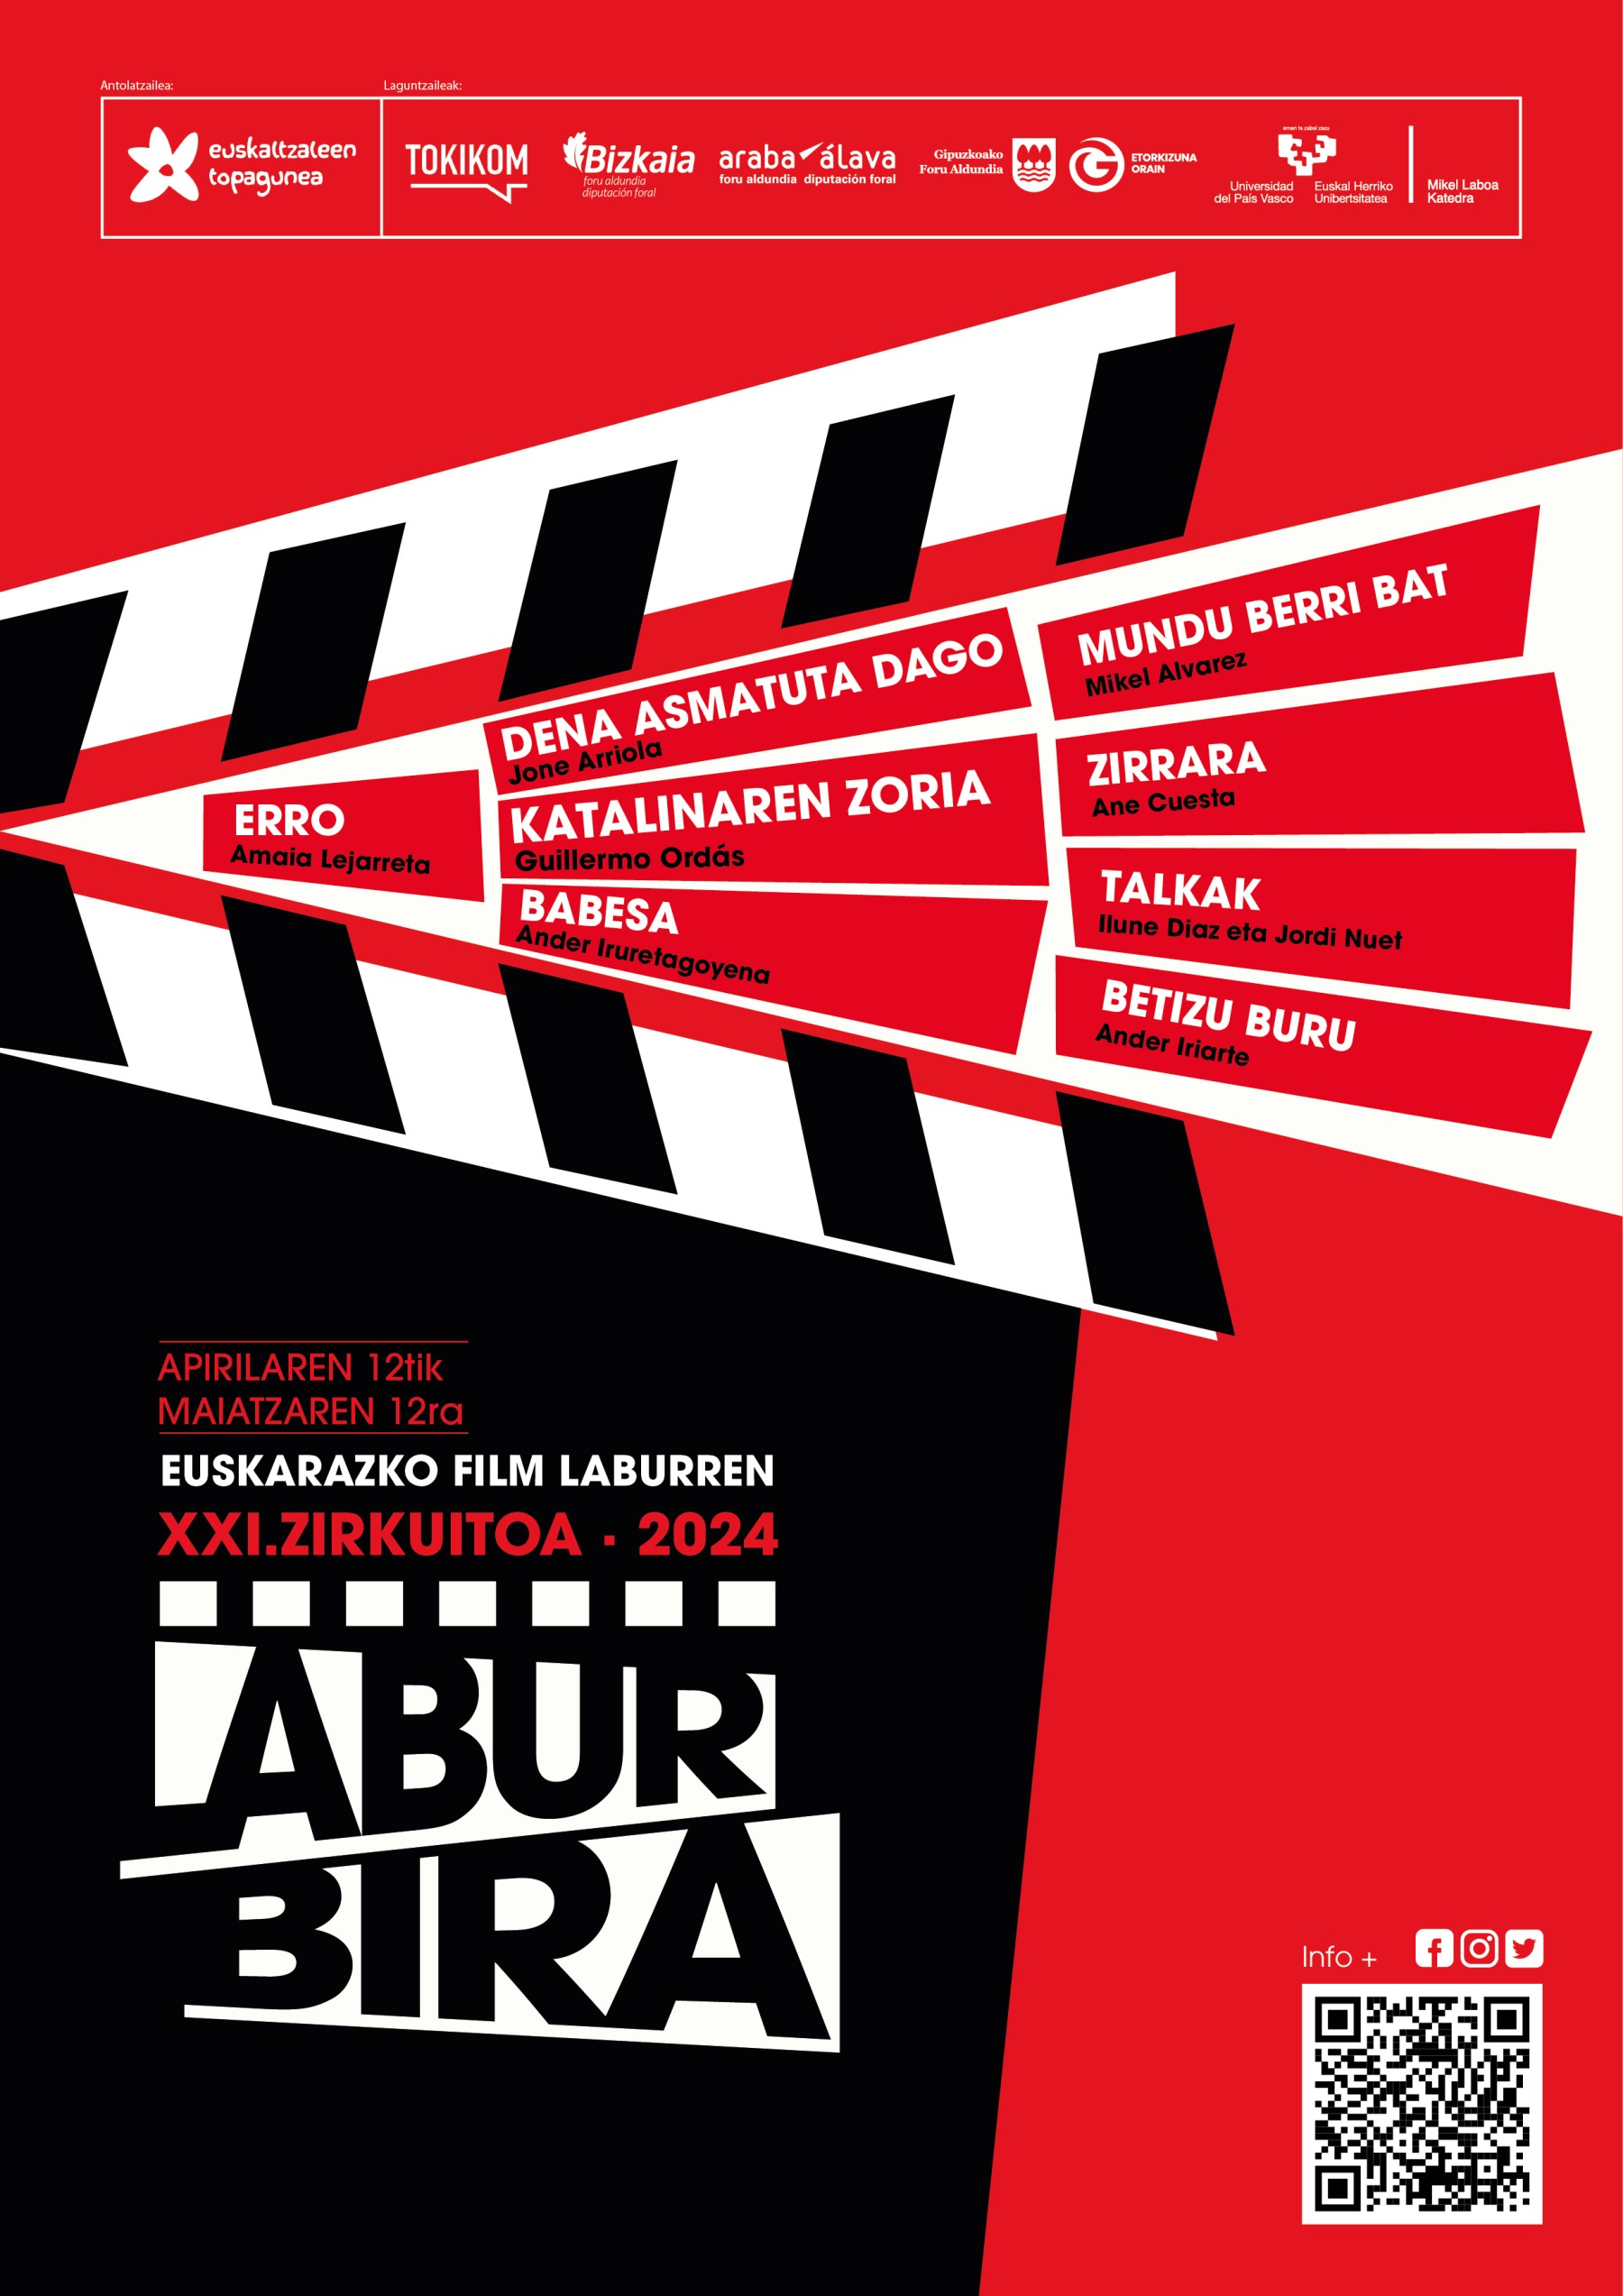 Open the deadline to organize a screening of LABURBIRA